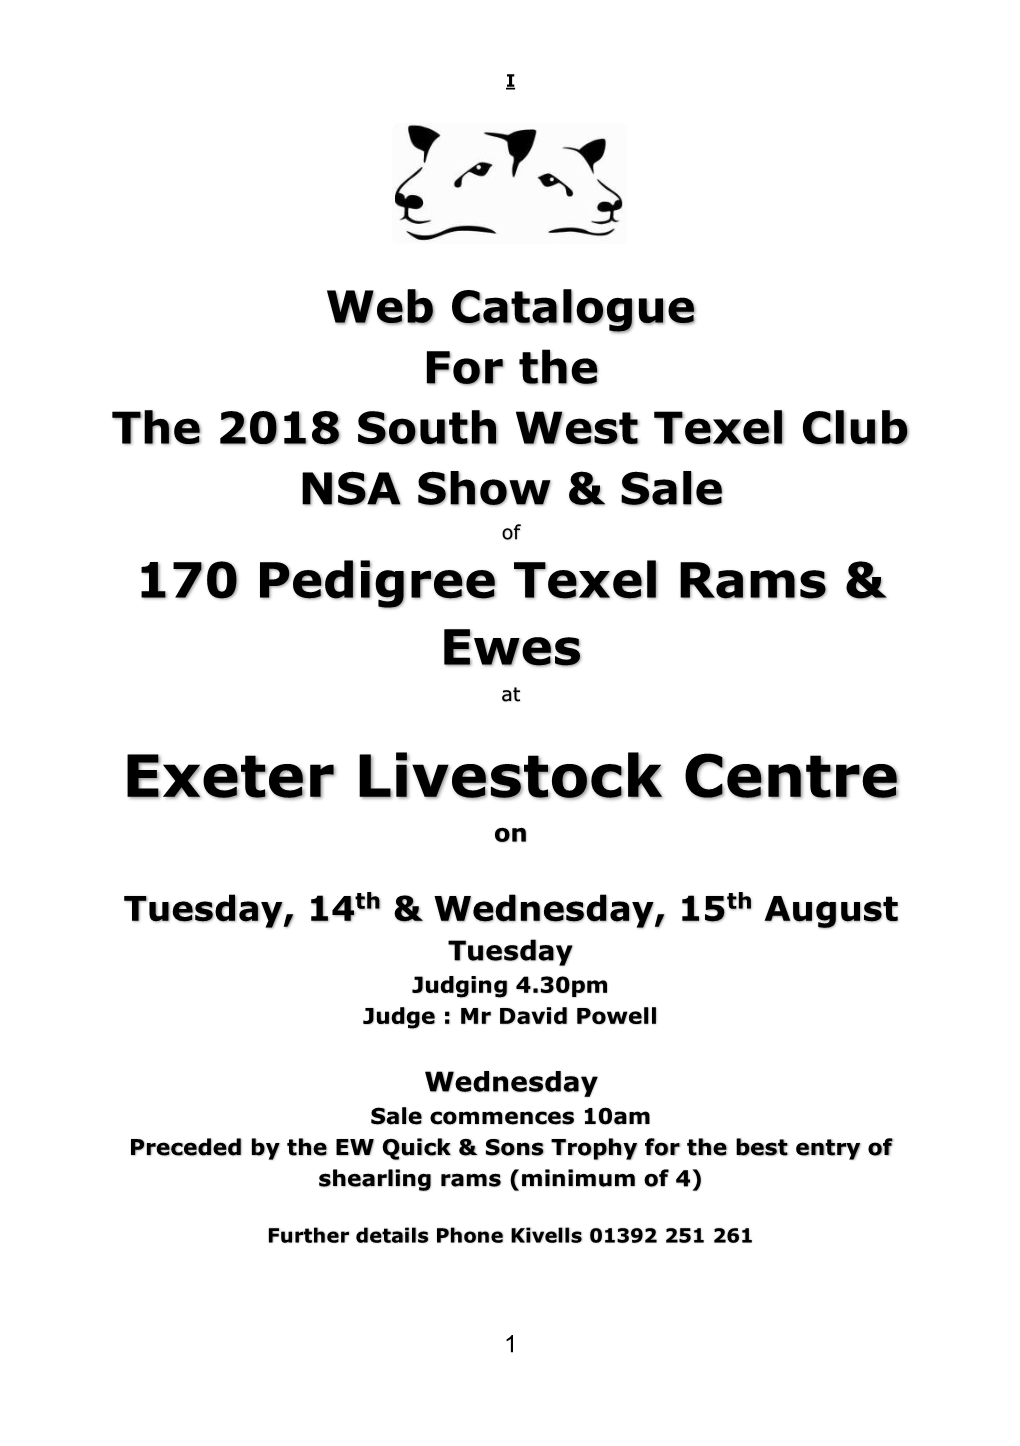 Exeter Livestock Centre On